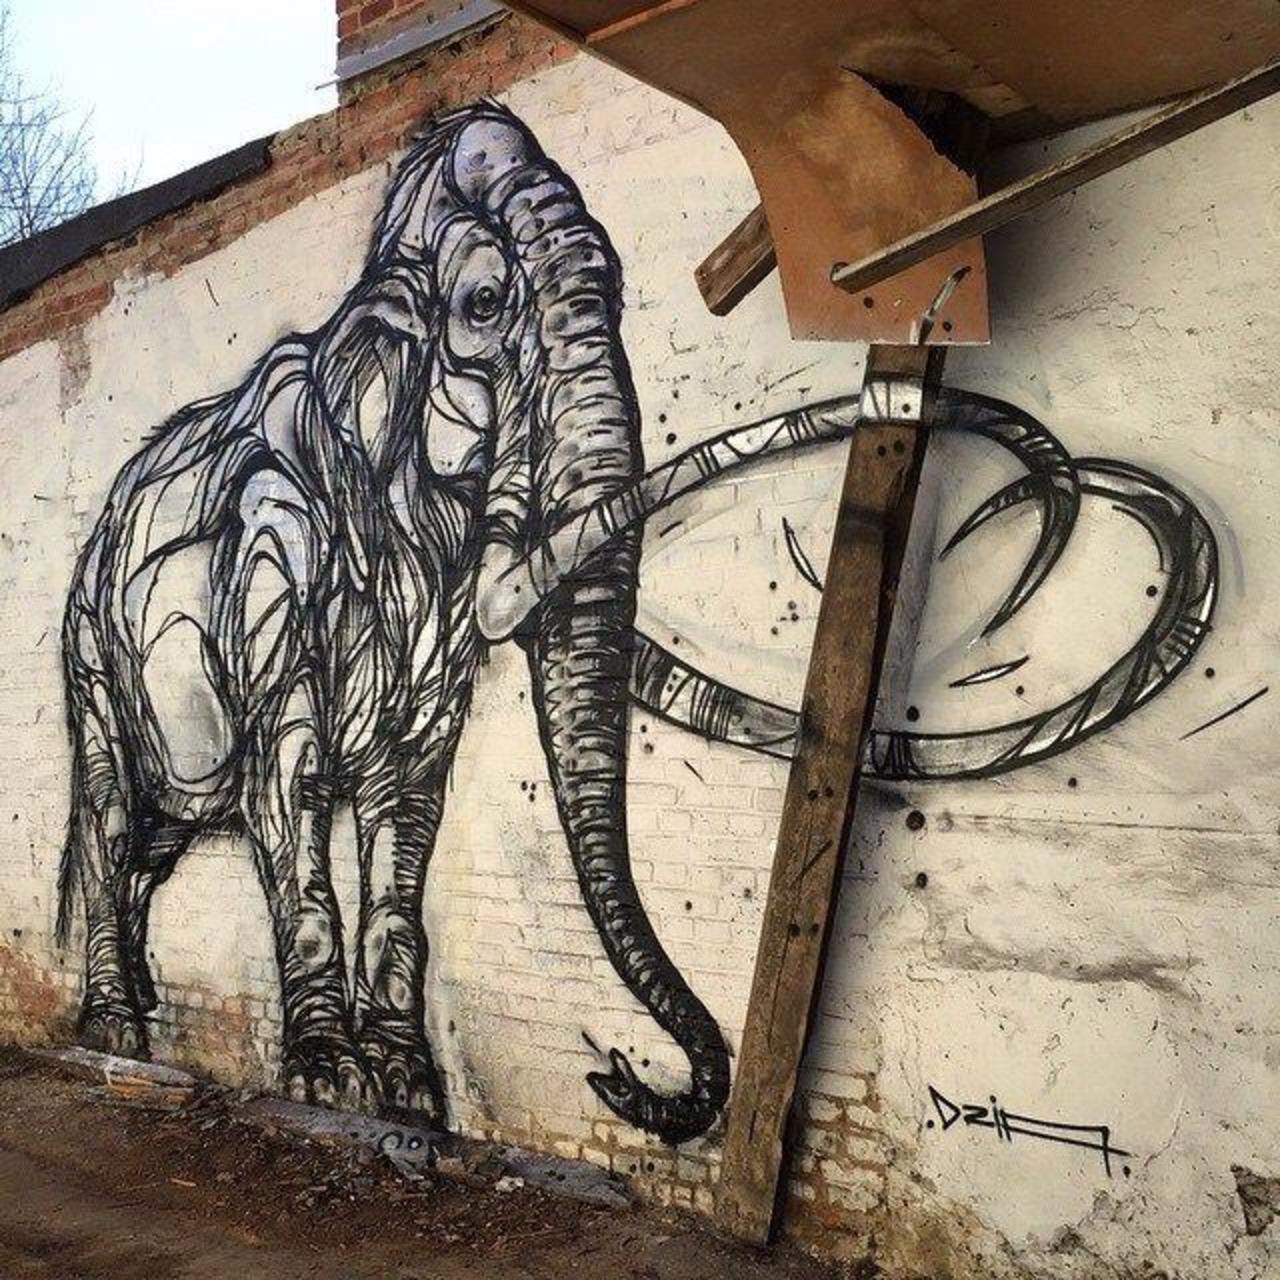 Mammoth. New nature in Street Art wall by DZIA 

#art #graffiti #mural #streetart http://t.co/sAXs7dZ9sN